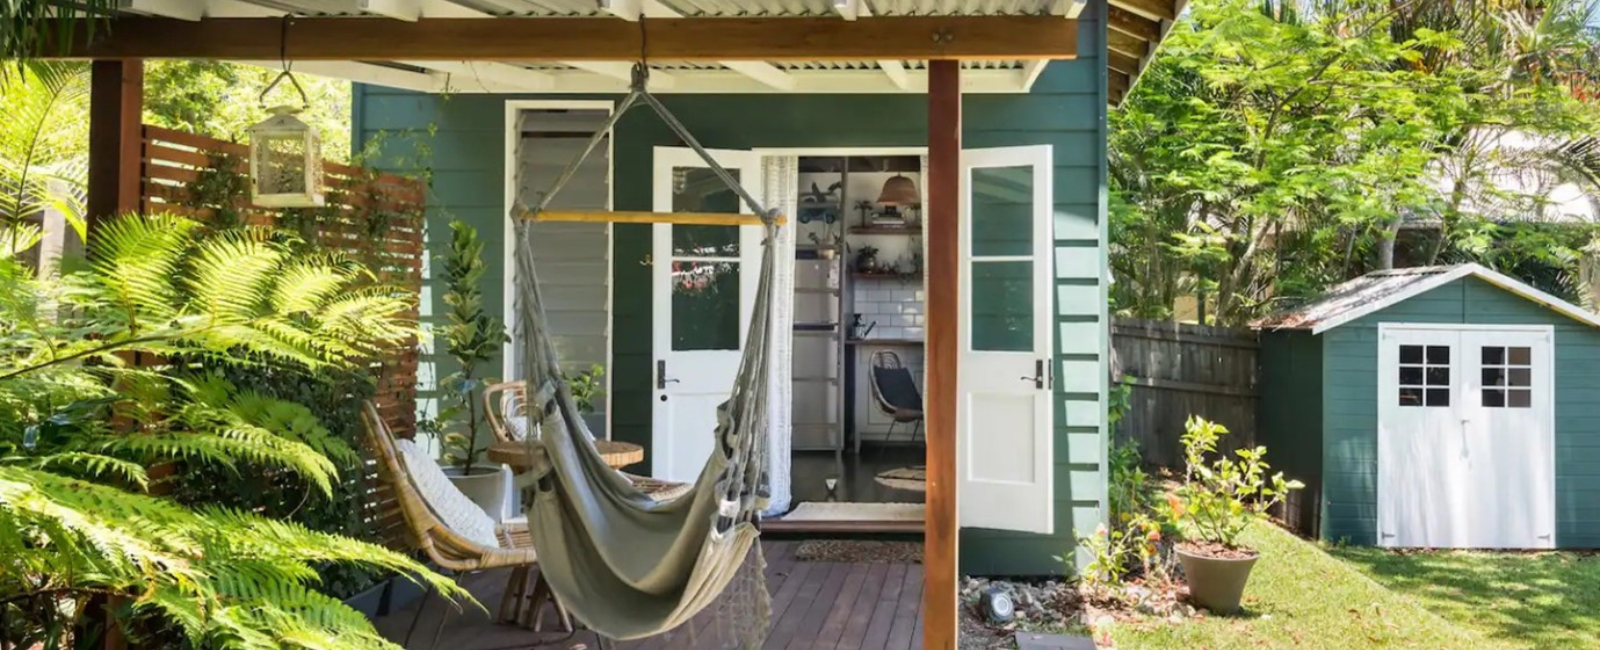 Hale Douglas tiny house with hanging hammock